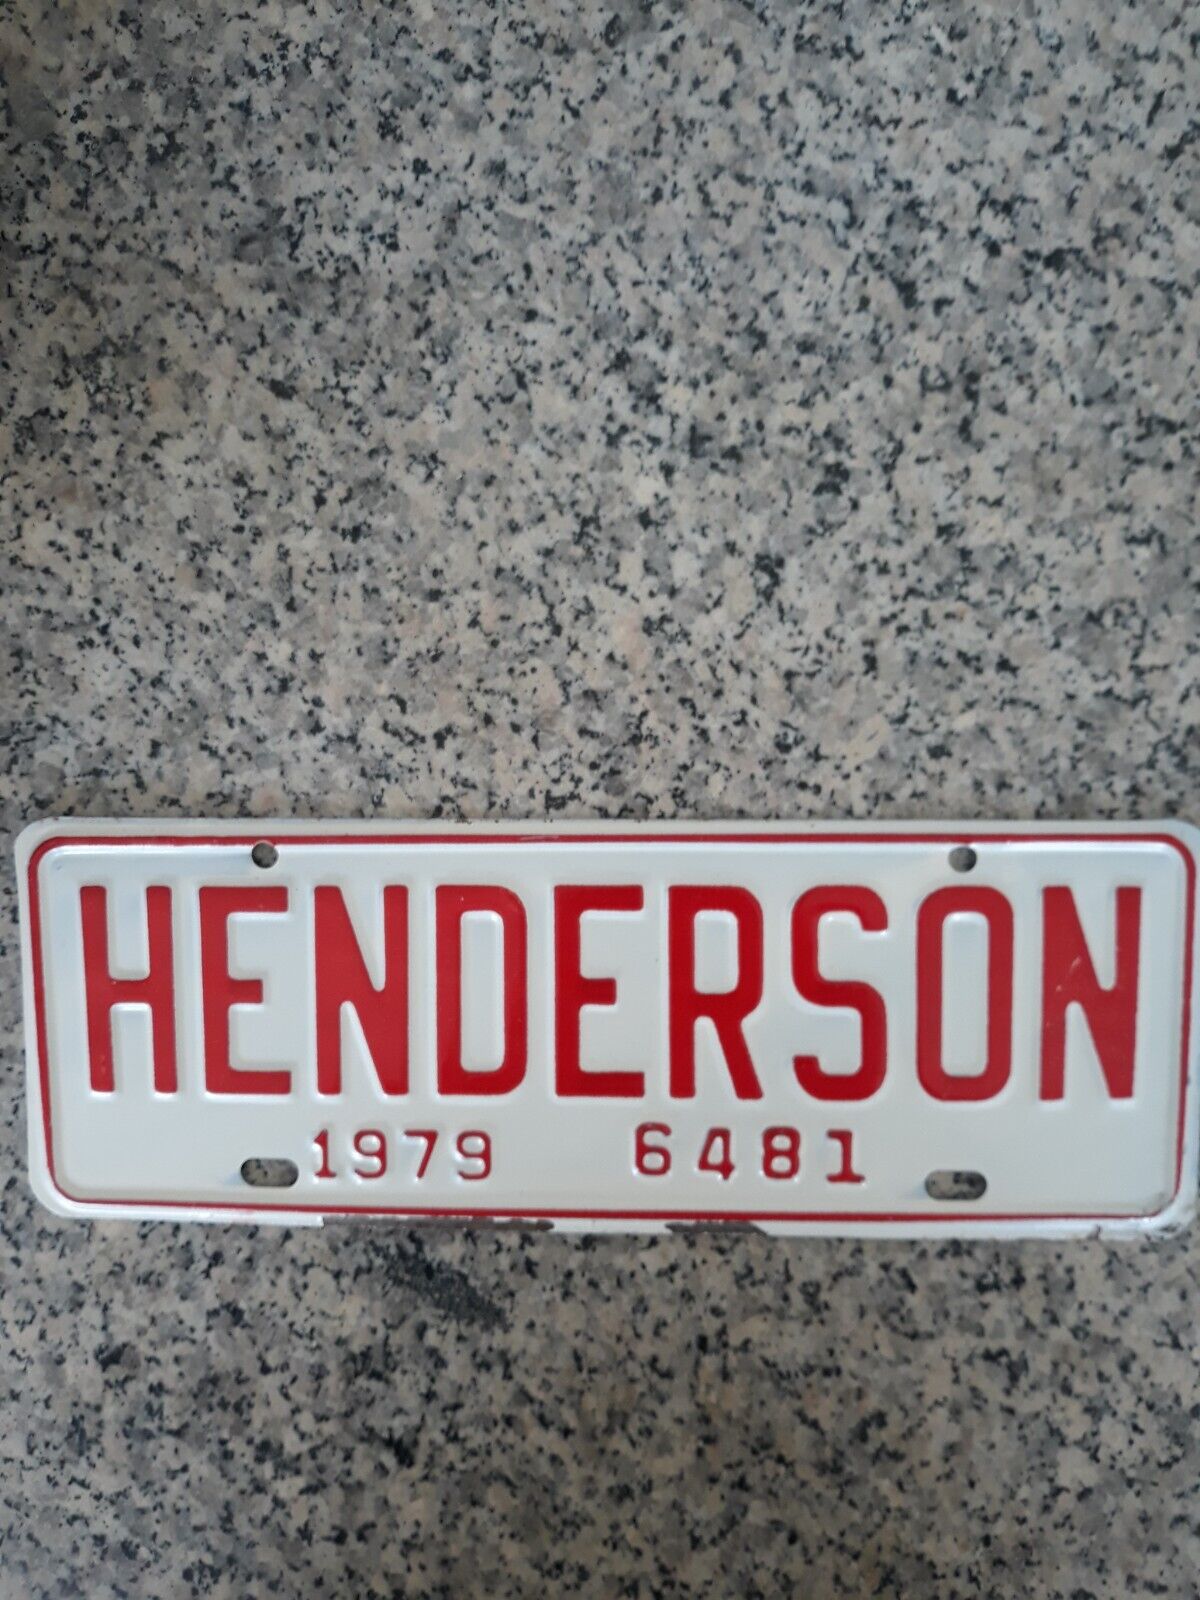 1979 HENDERSON NC CITY LICENSE PLATE TAG